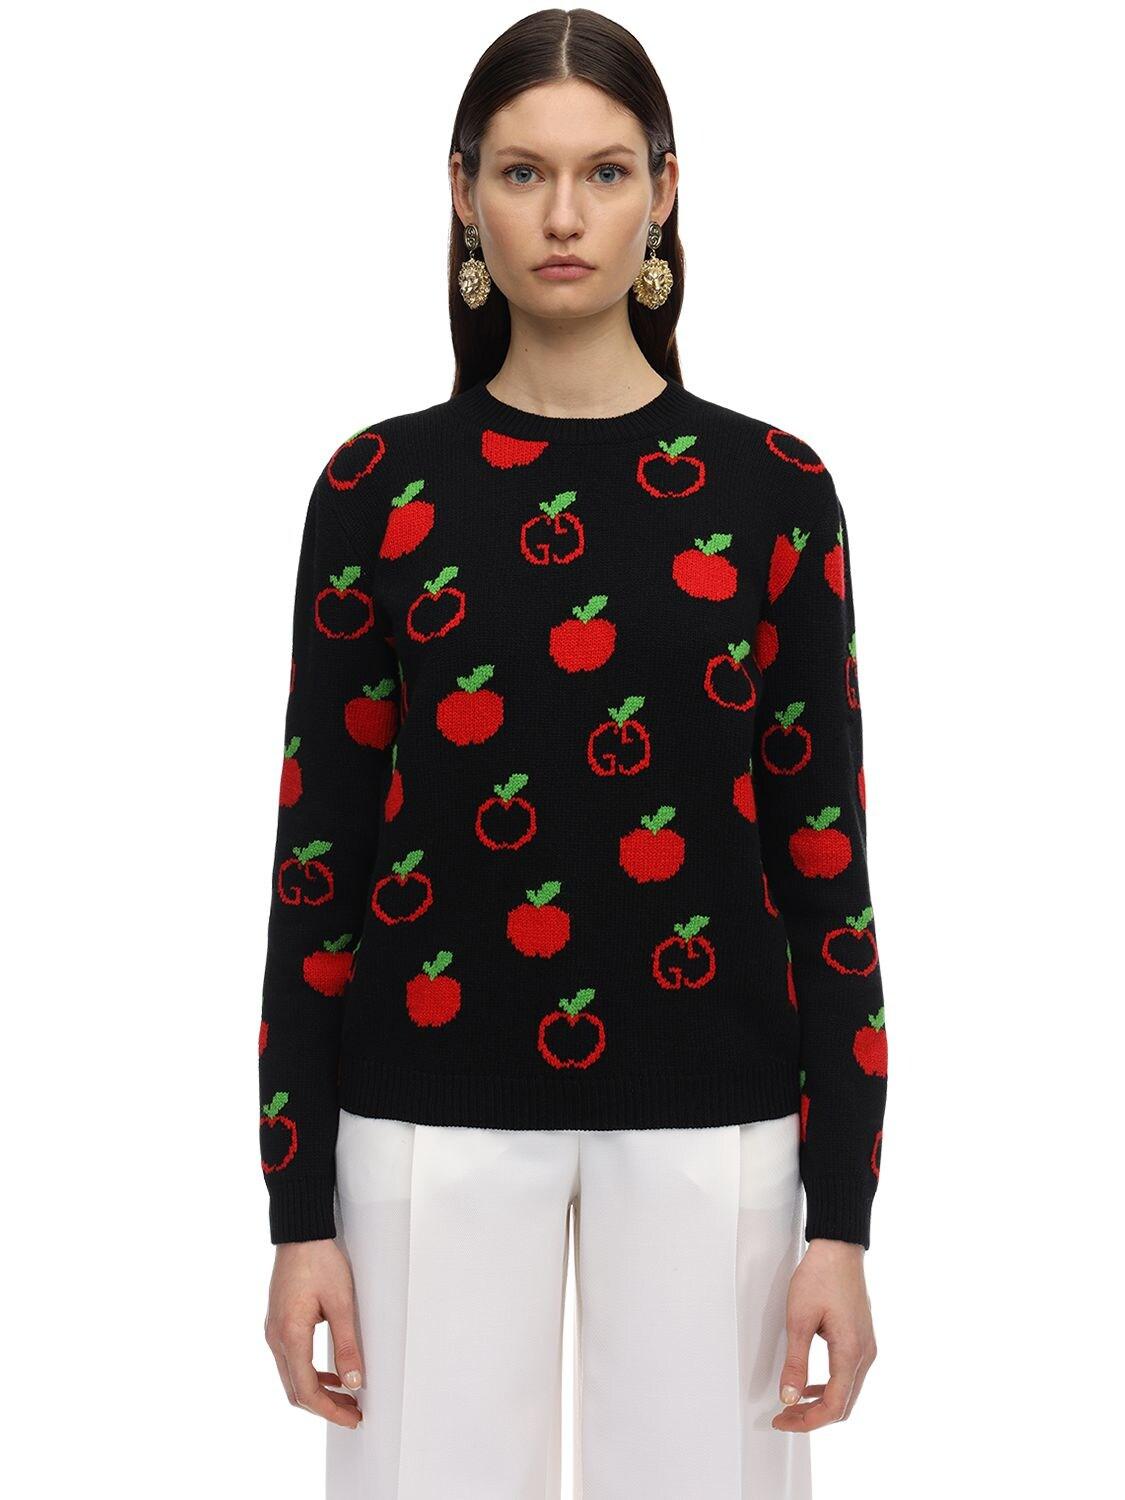 Gucci Gg & Apple Wool Intarsia Knit Sweater in Black | Lyst